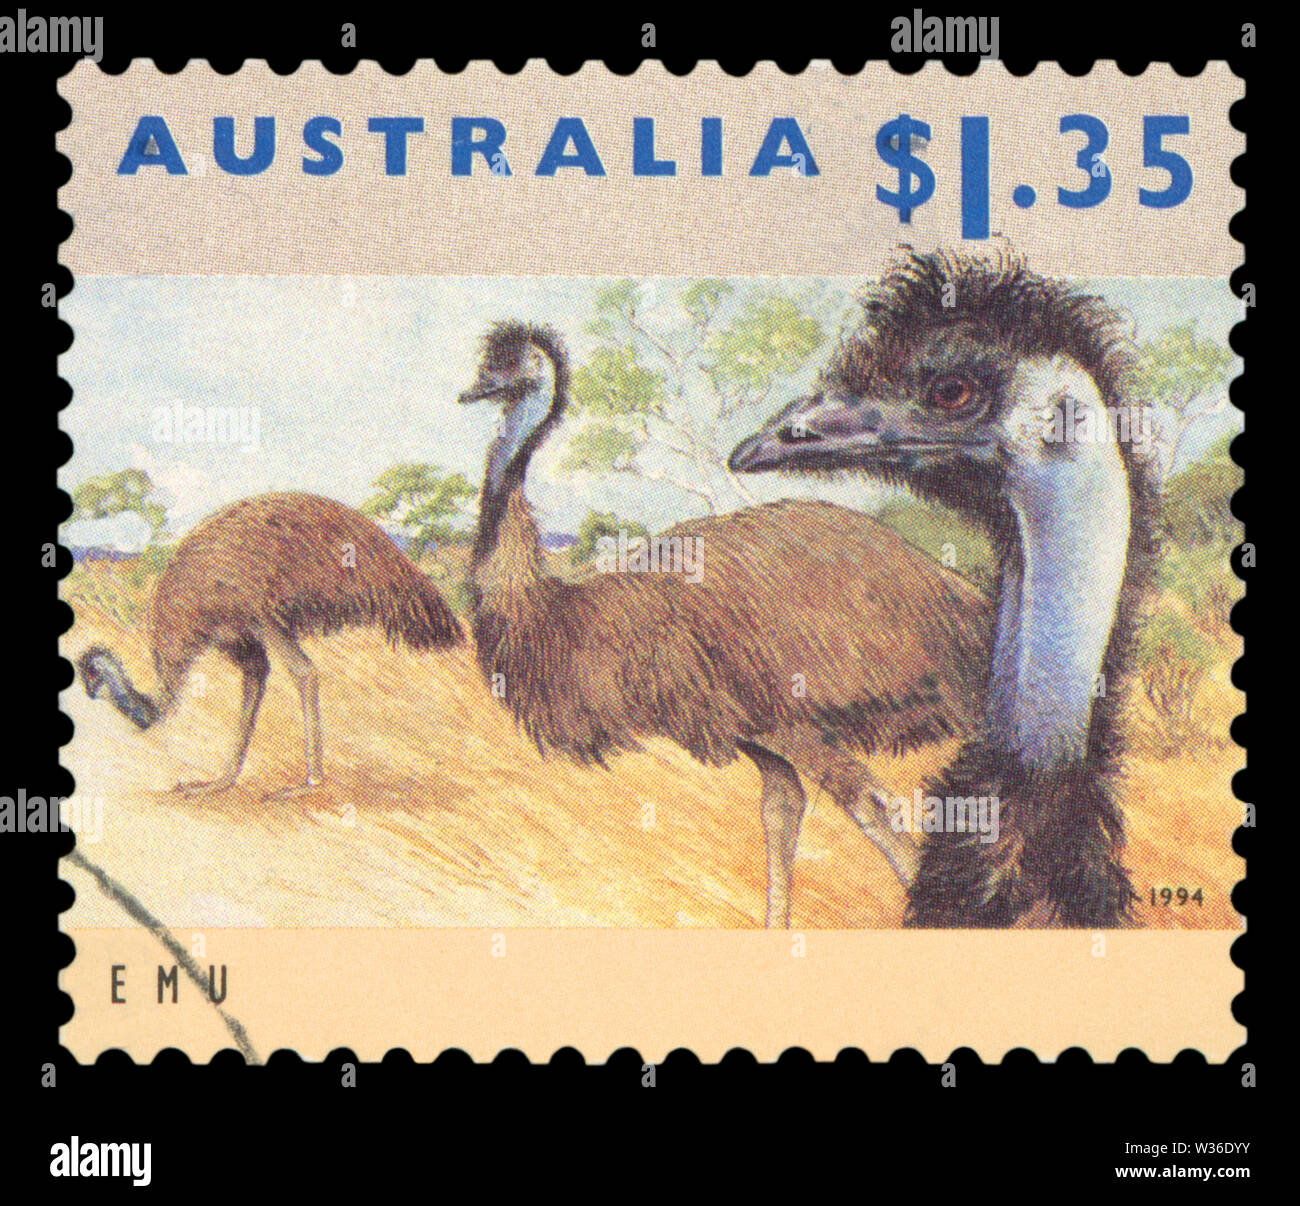 AUSTRALIA - circa 1994: un sello impreso en Australia muestra un animal de la UEM, la serie de animales australianos, circa 1994. Foto de stock